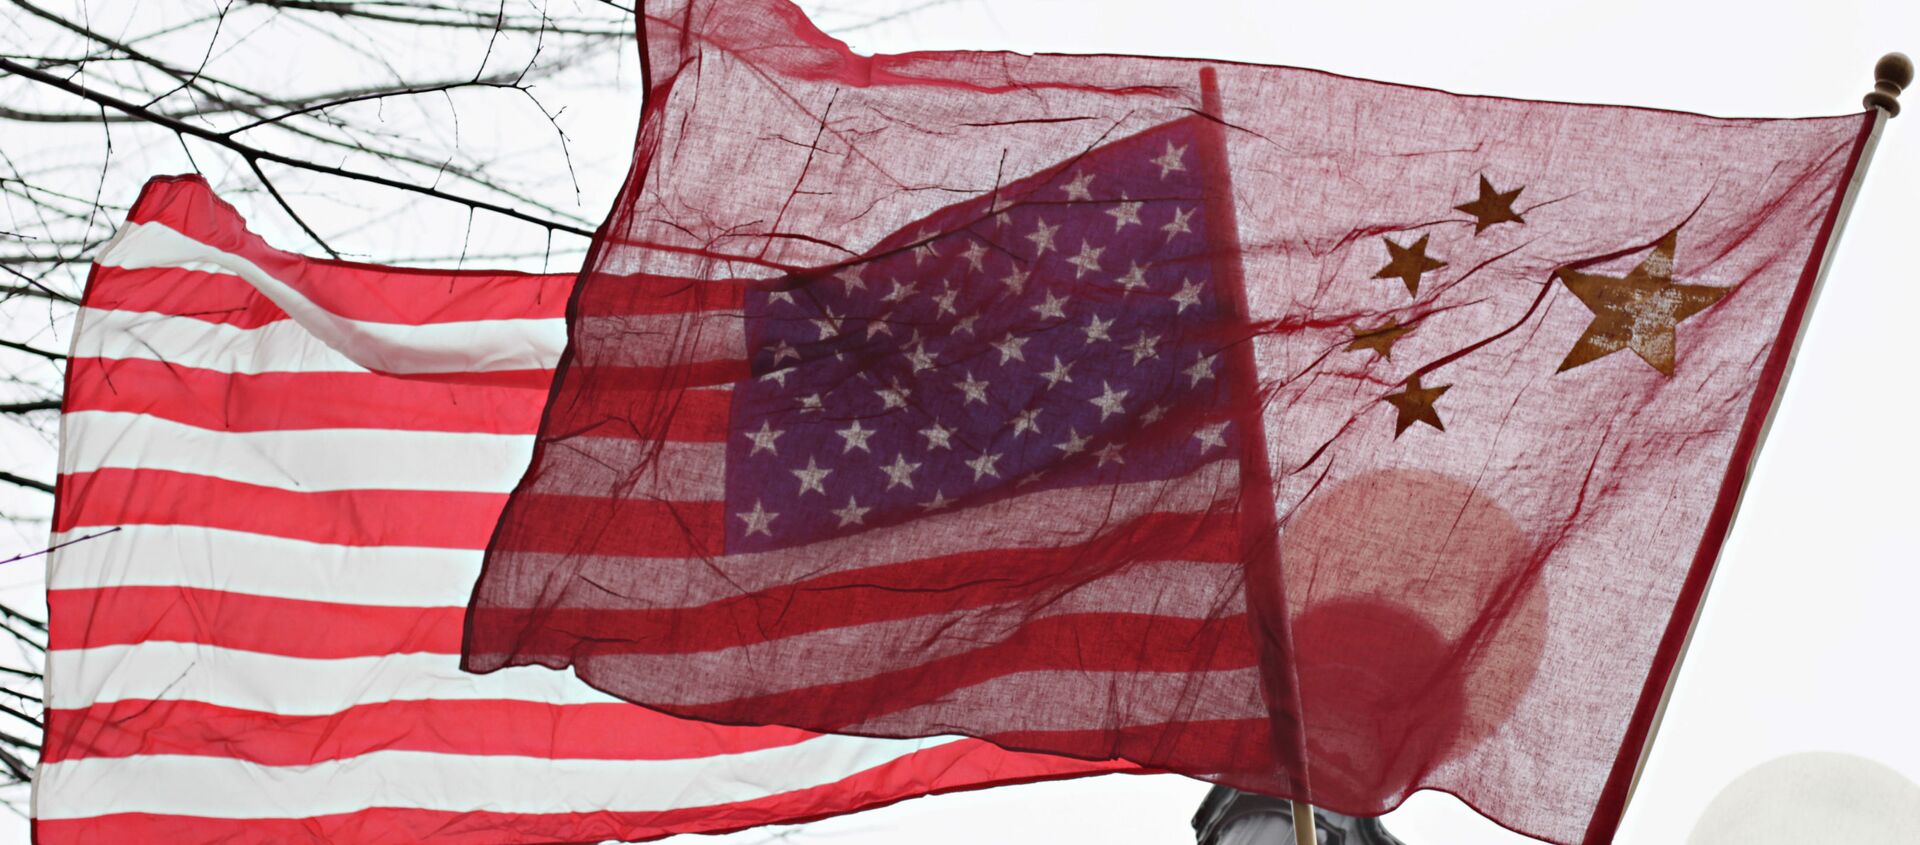 Американский и китайский флаги перед Белым домом в Вашингтоне - Sputnik Узбекистан, 1920, 05.02.2021